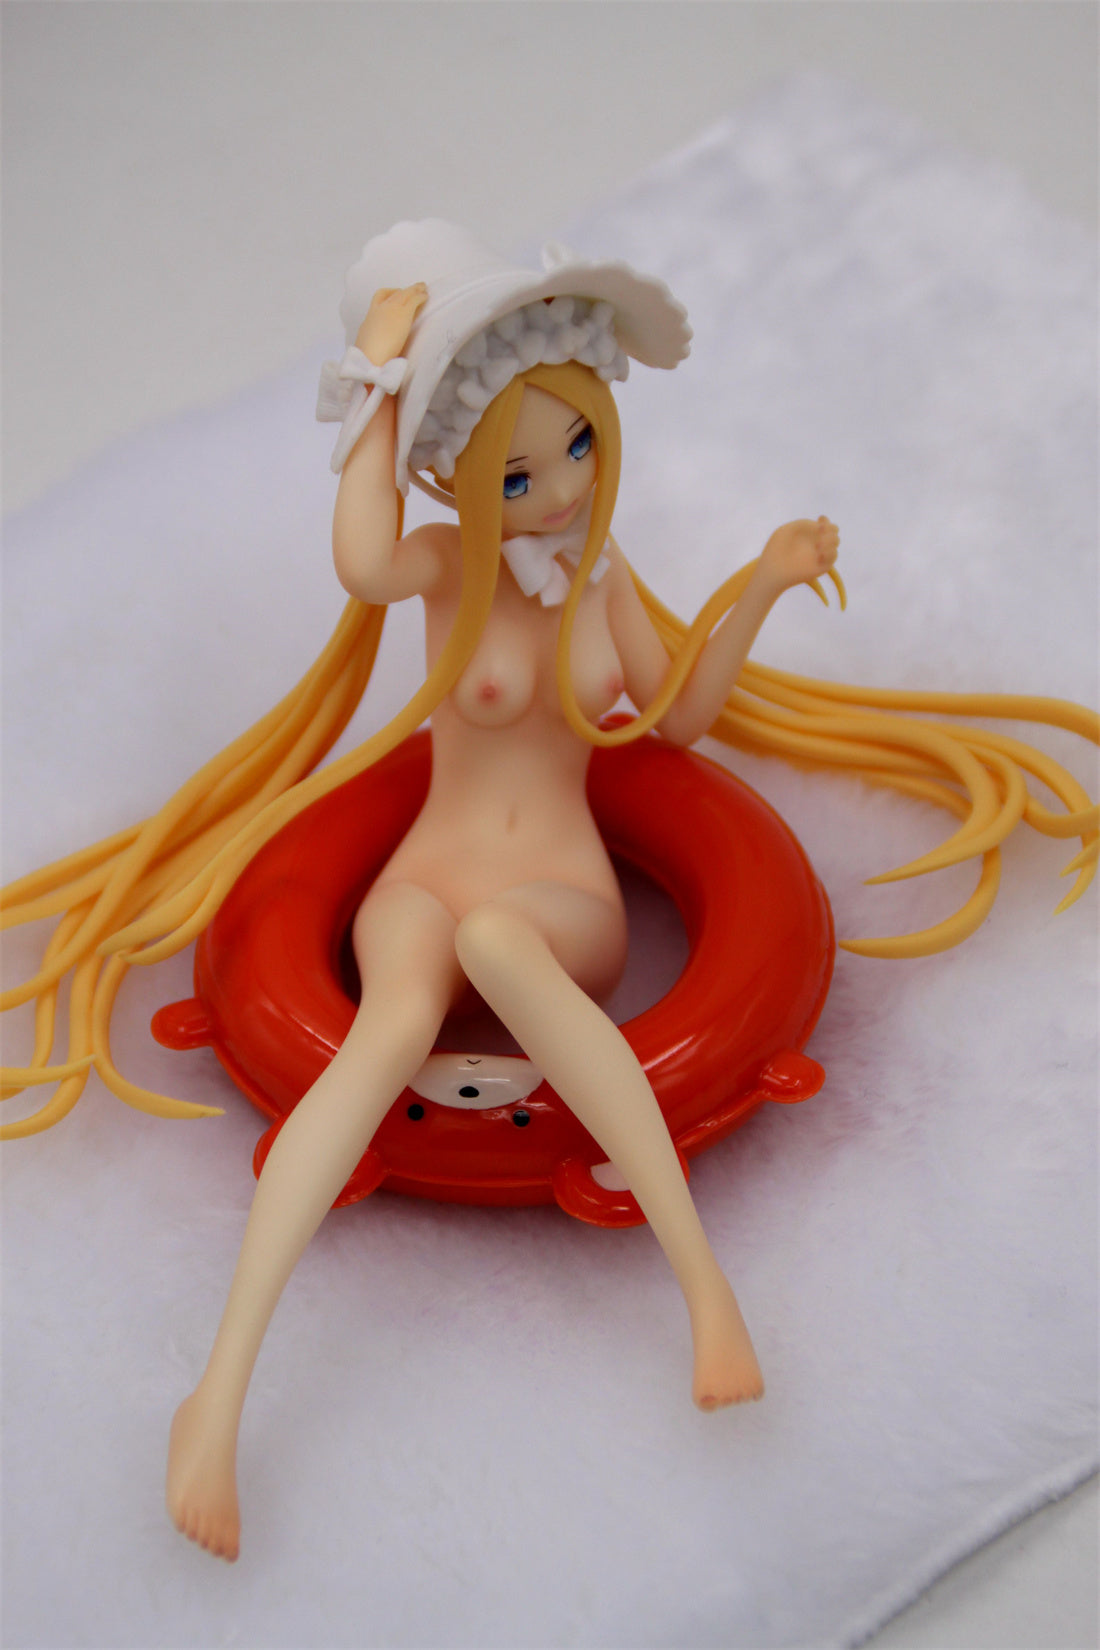 Fate/Grand Order Foreigner/Abigail Williams (Summer) 1/7 anime girl figure naked anime figures